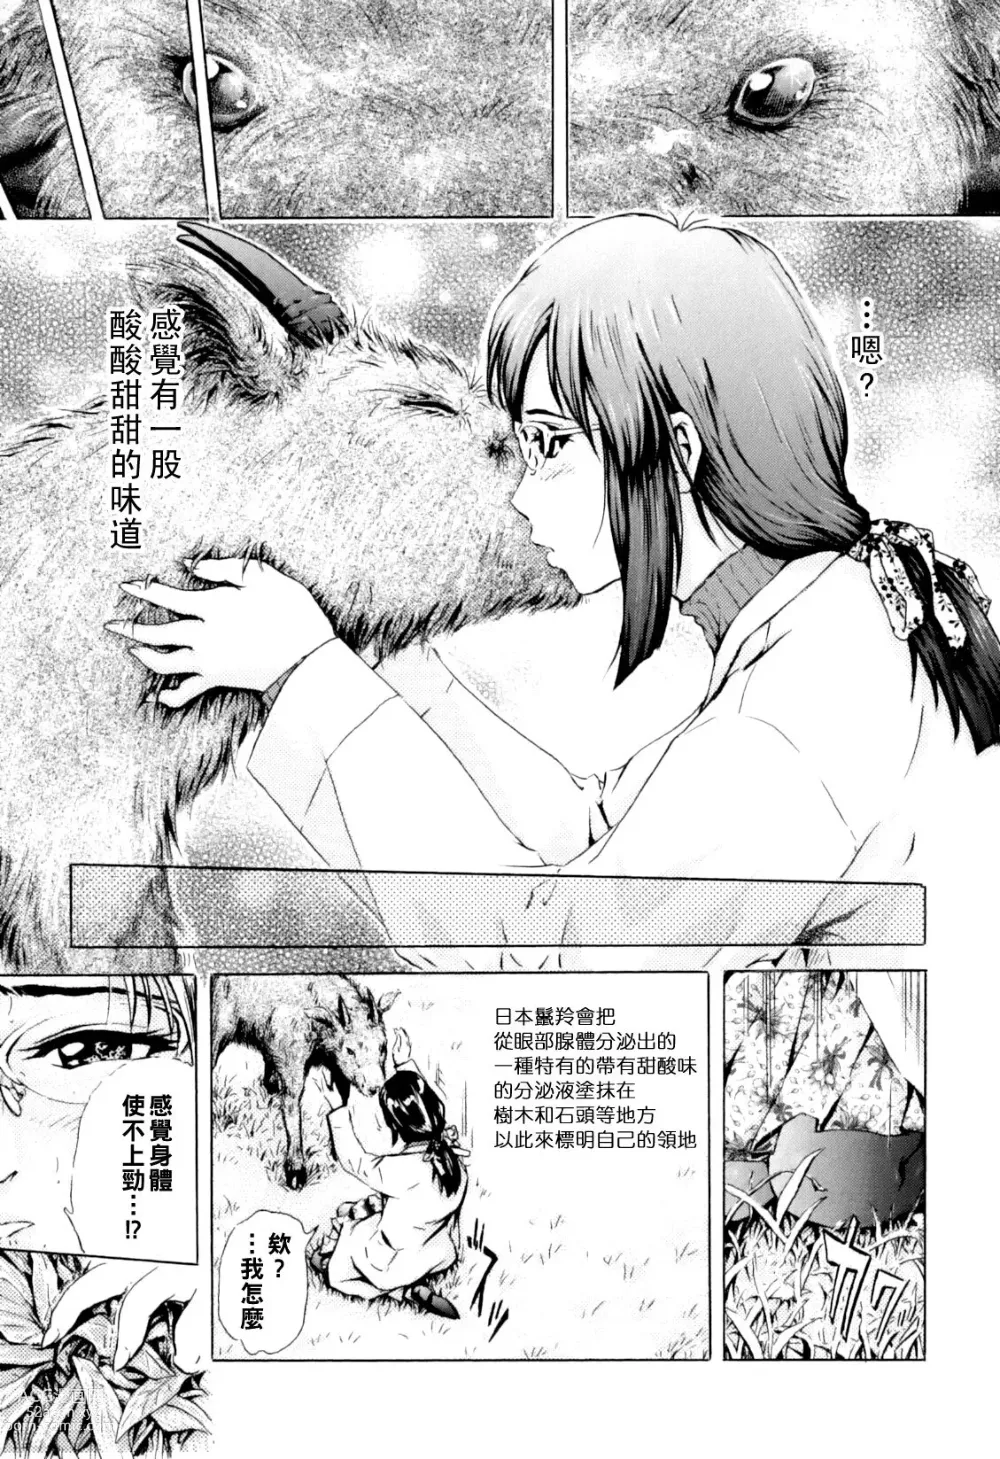 Page 7 of manga Tokubetsu Tennen Kinenbutsu - Special Natural Monuments